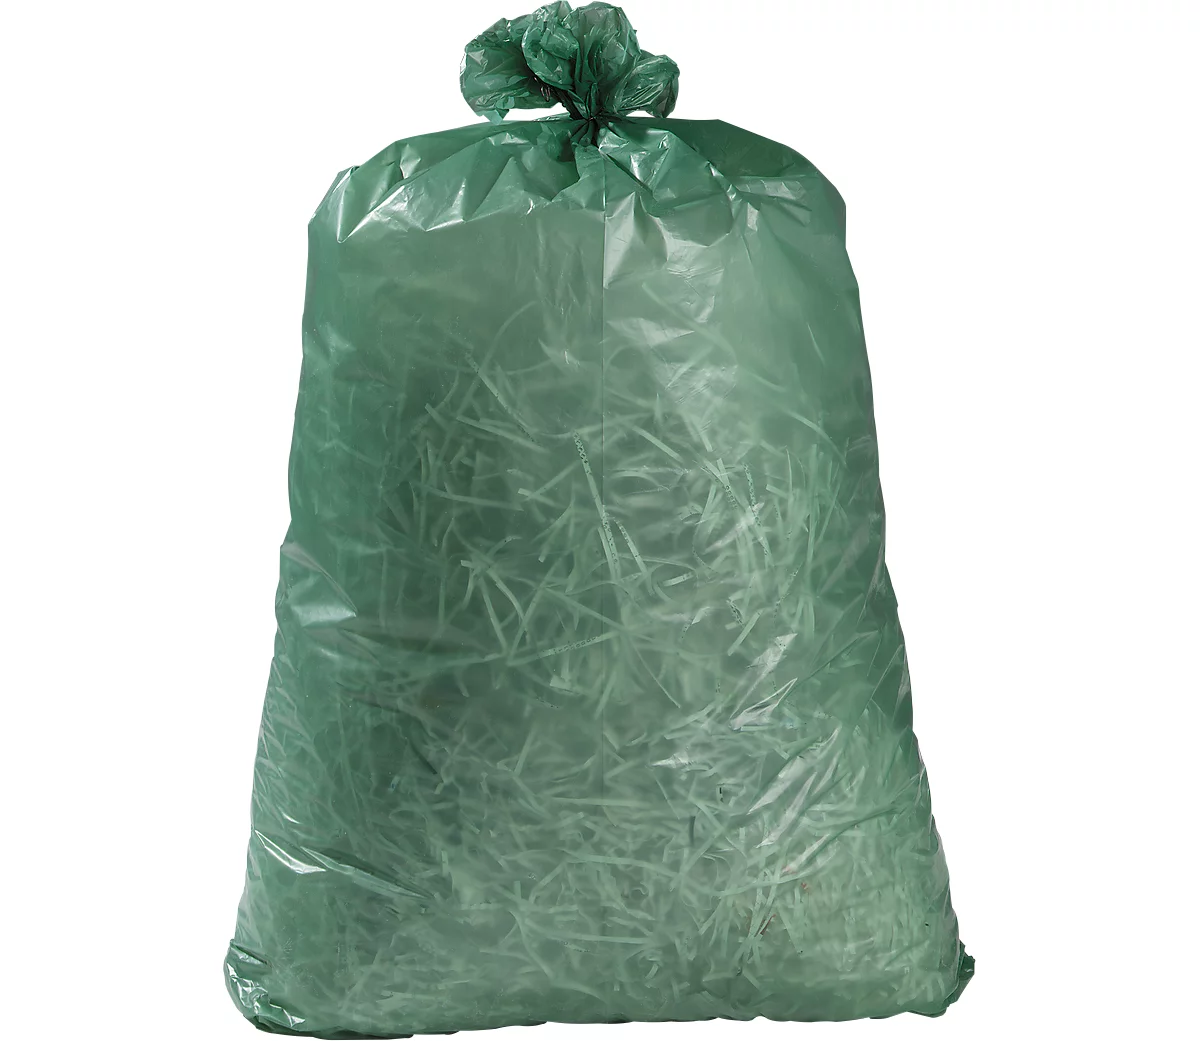 Abfallsäcke Premium, Material LDPE, grün, 120 Liter, 250 Stück